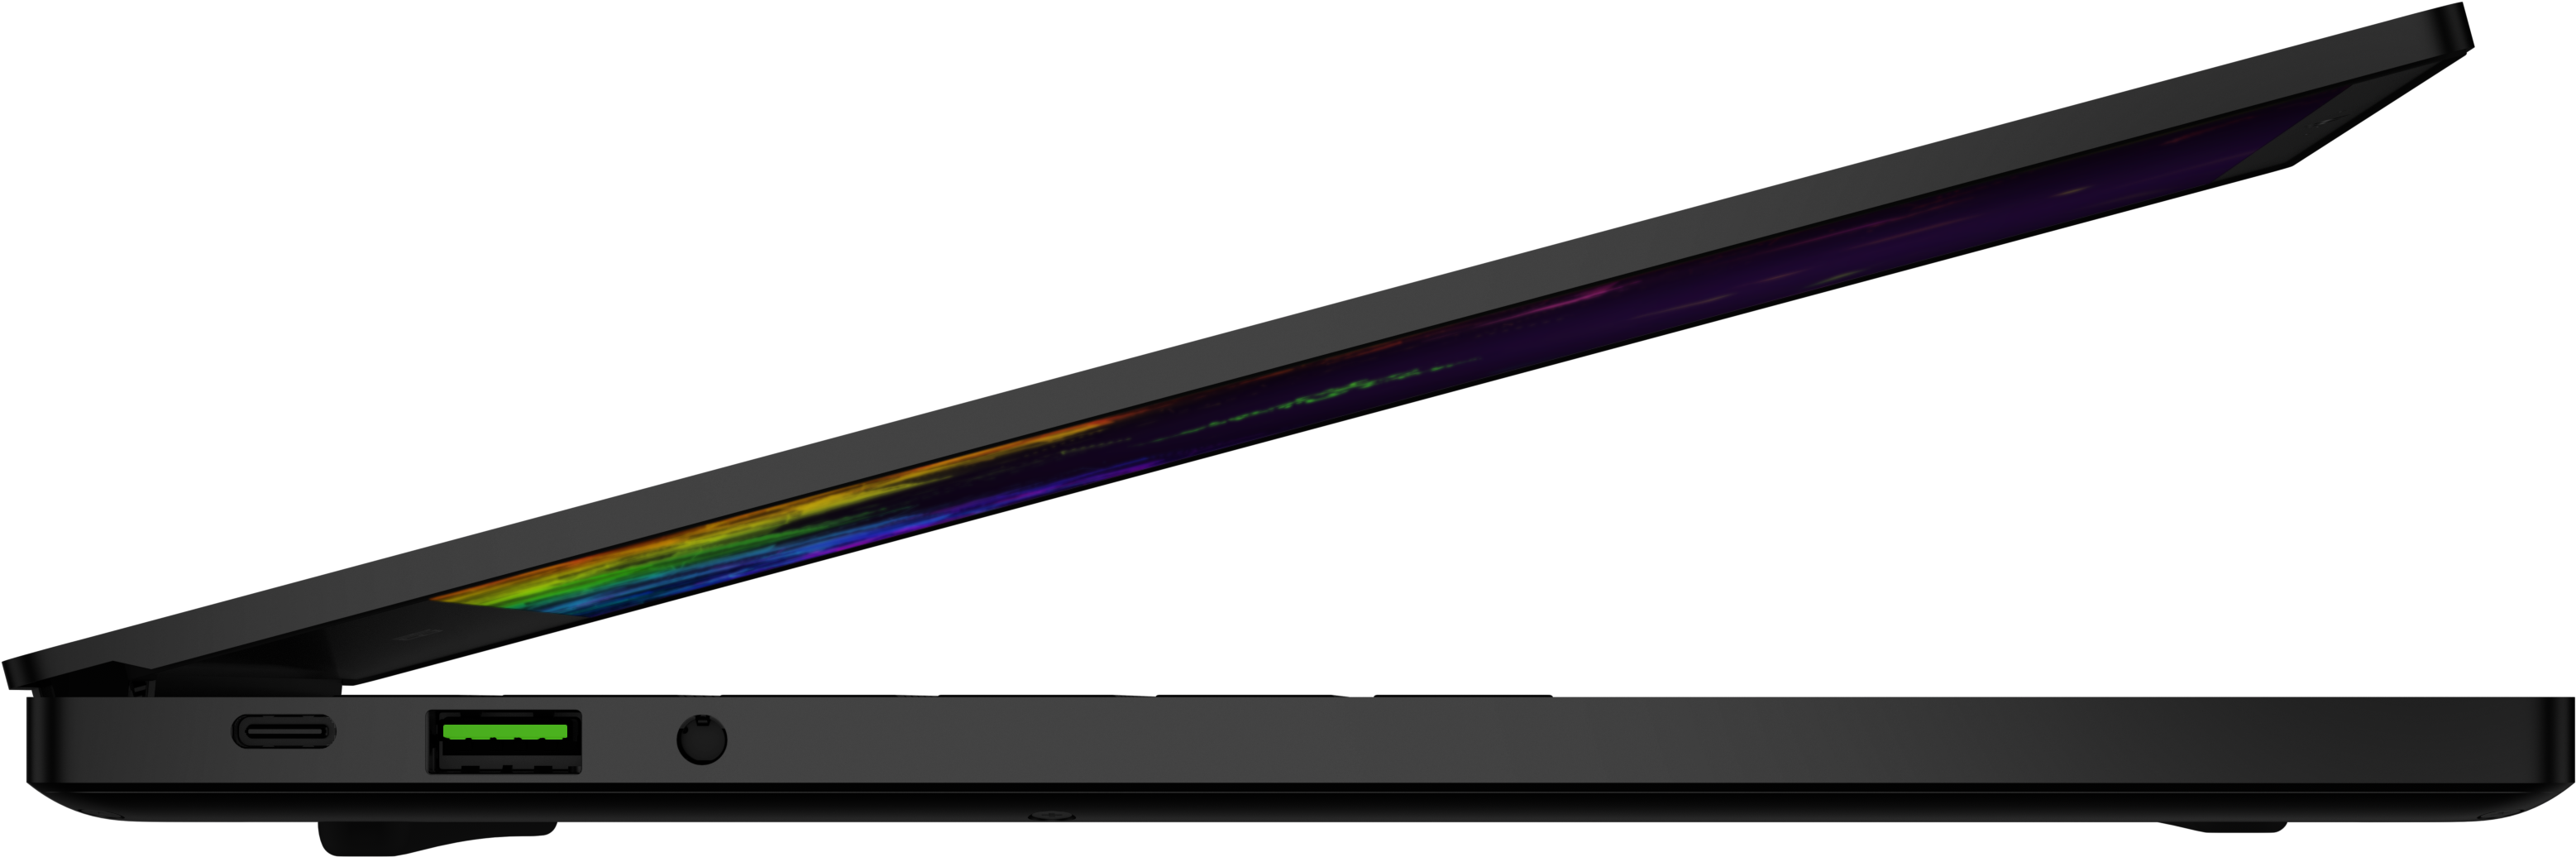 Razor Blade Laptop Side View PNG image